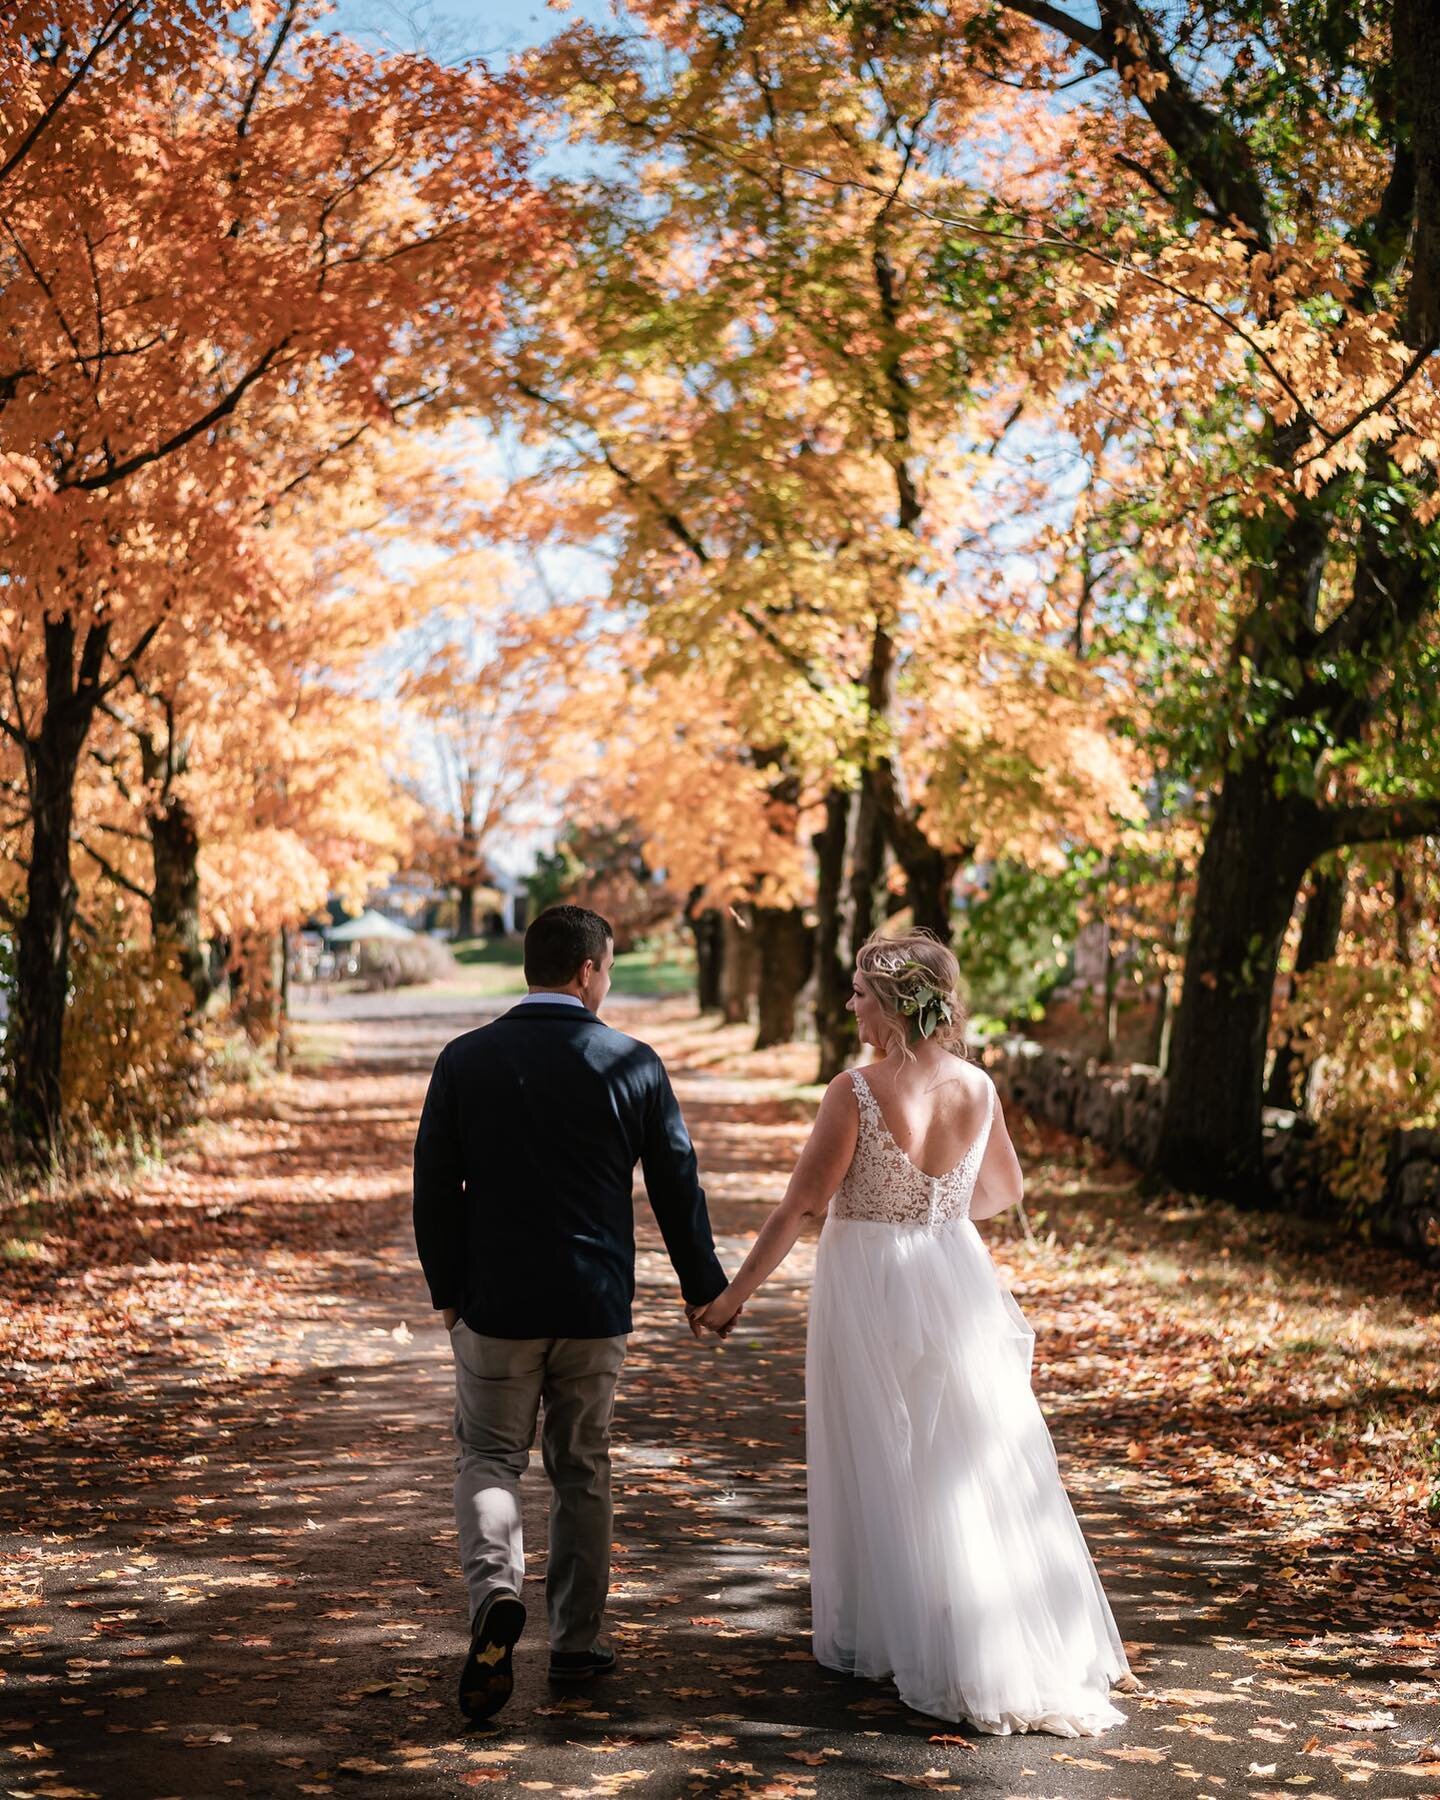 Massachusetts puts on one hell of a fall display.
.
.
.
.
.
#Elopement #elopementphotographer #intimatewedding #littlethingstheory #junebugwedding s#elope #greenweddingshoes #destinationweddingphotographer #loveintentionally #bohowedding #indieweddin